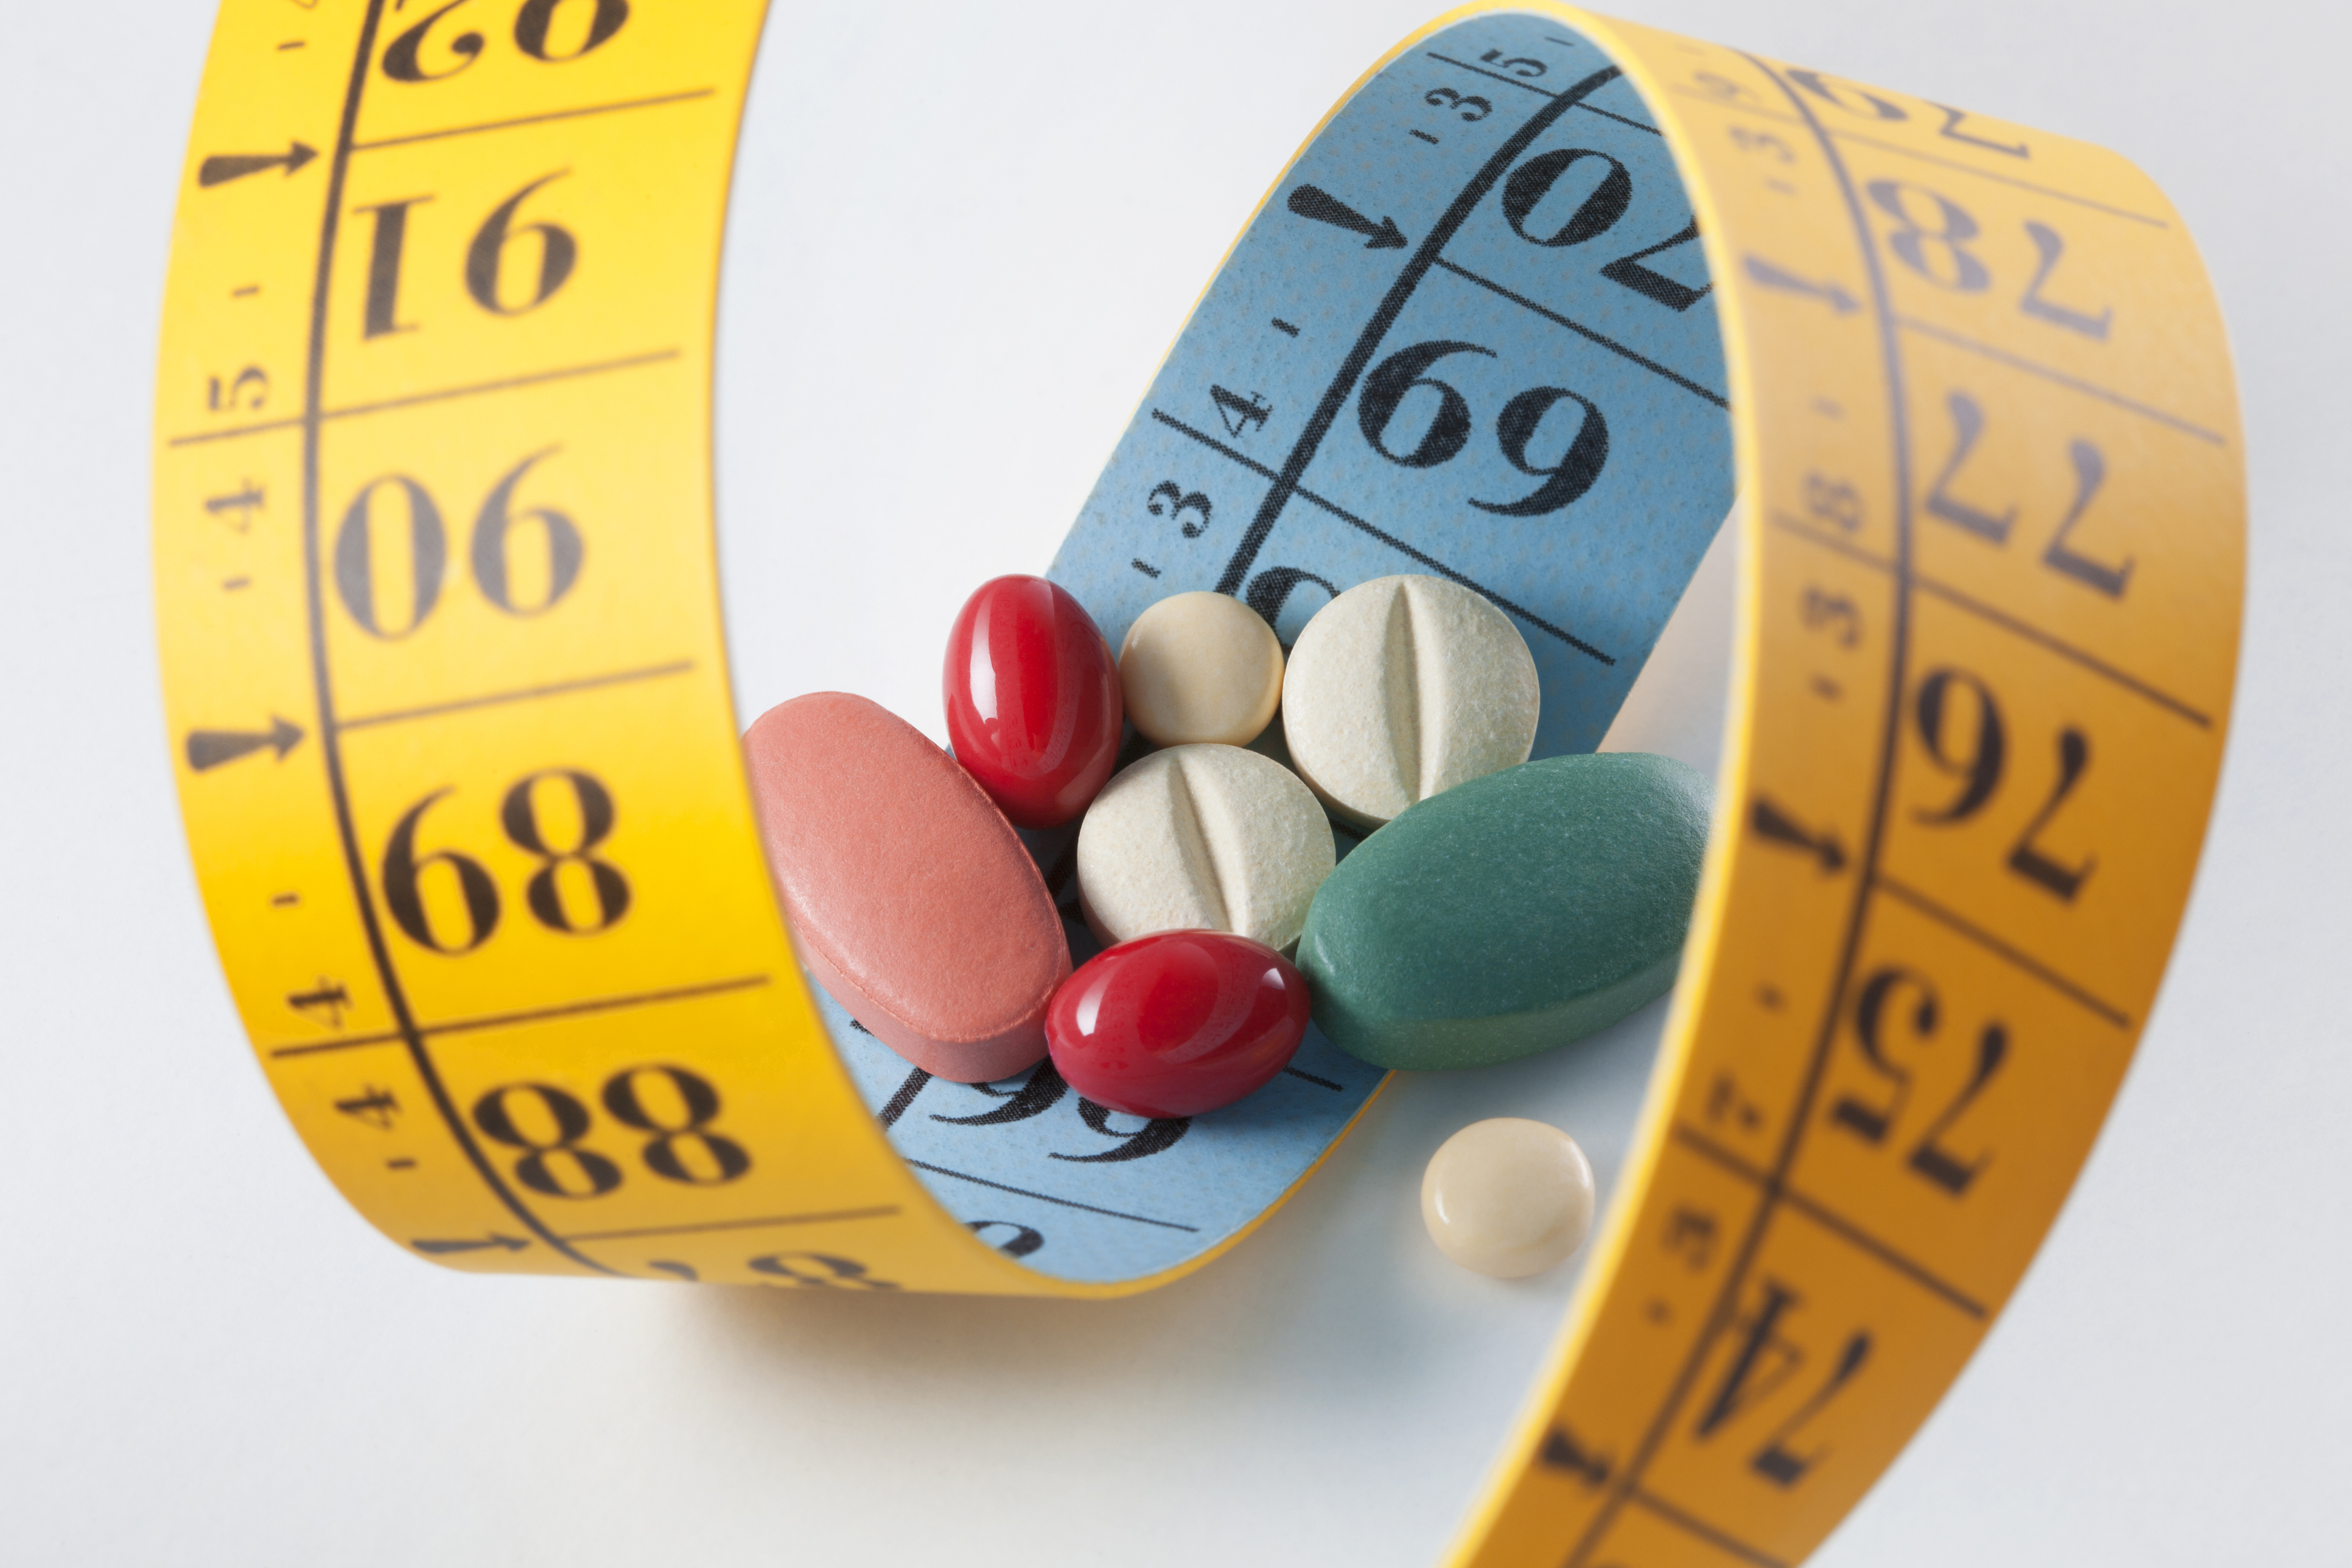 Prescription Weight Loss with Qsymia® (Phentermine and Topiramate